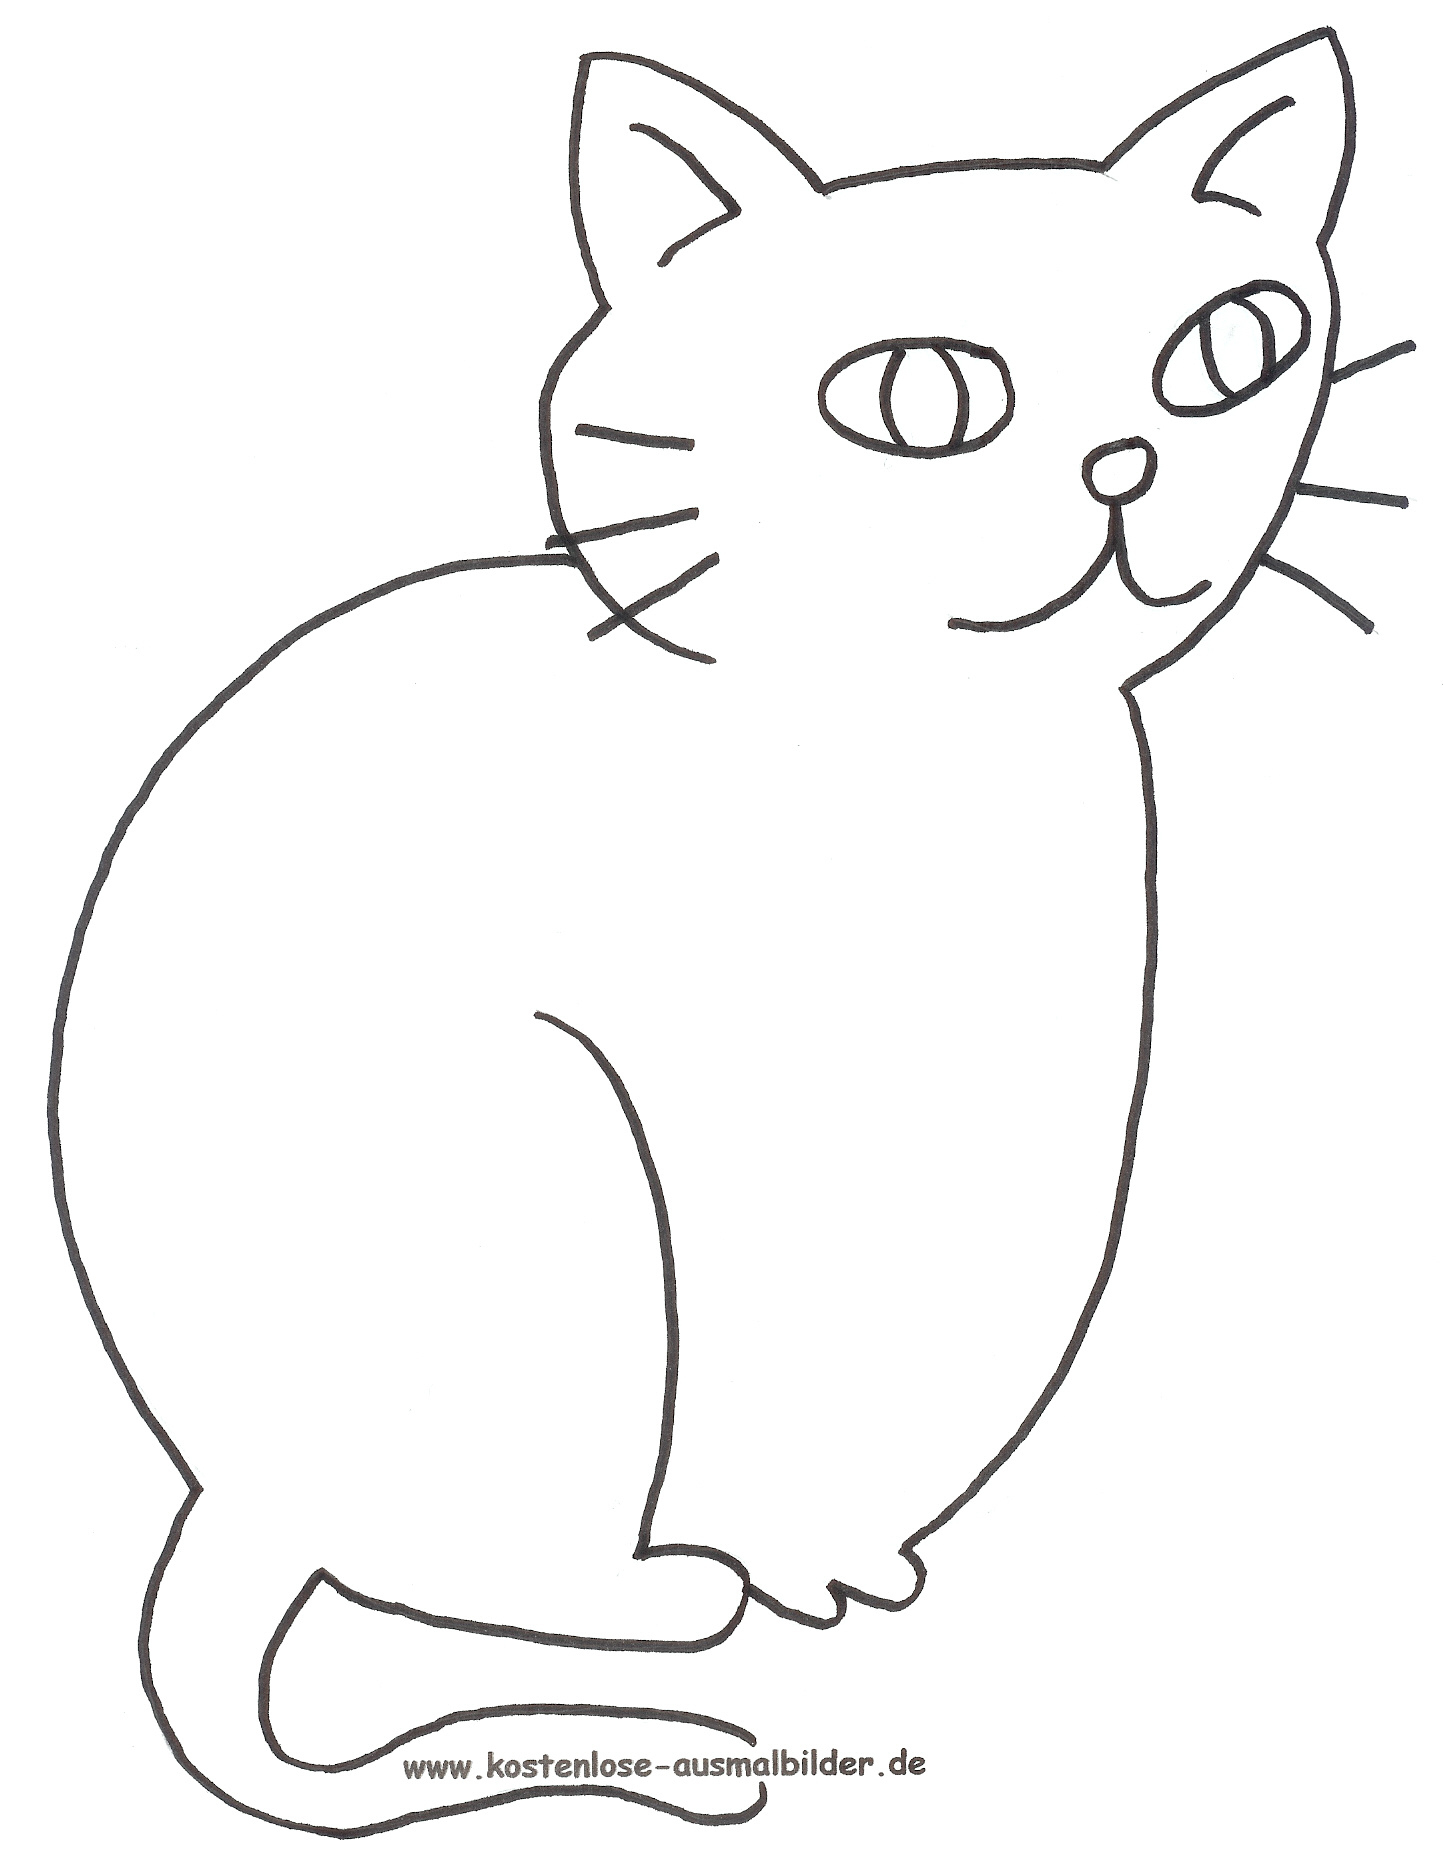 Ausmalbild Katze Zum Ausdrucken in Katzen Ausmalbilder Ausdrucken